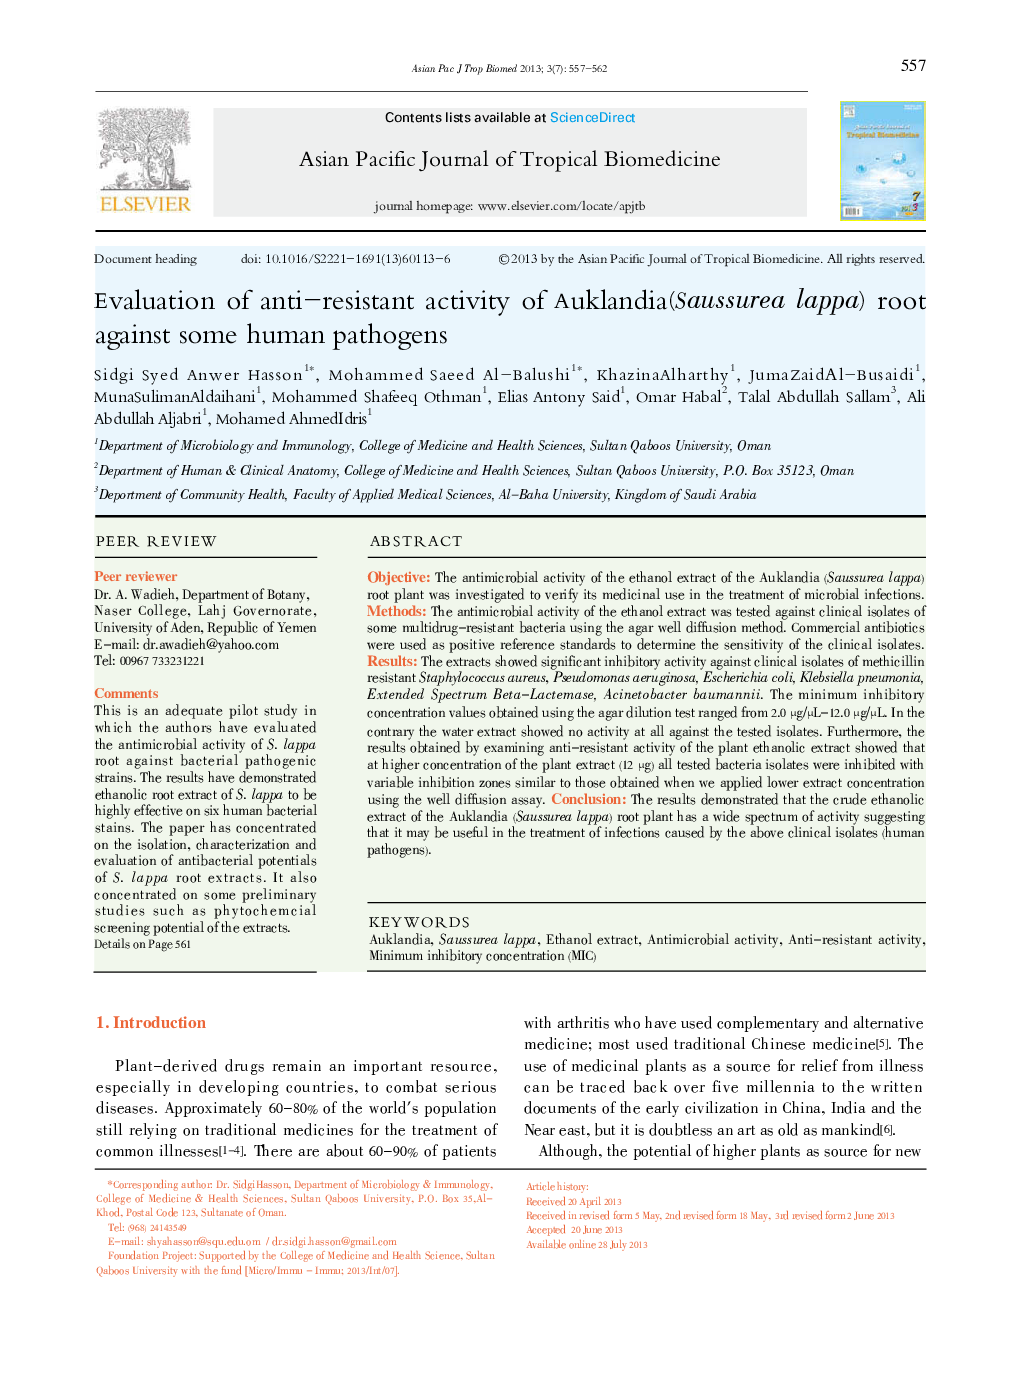 Evaluation of anti-resistant activity of Auklandia(Saussurea lappa) root against some human pathogens